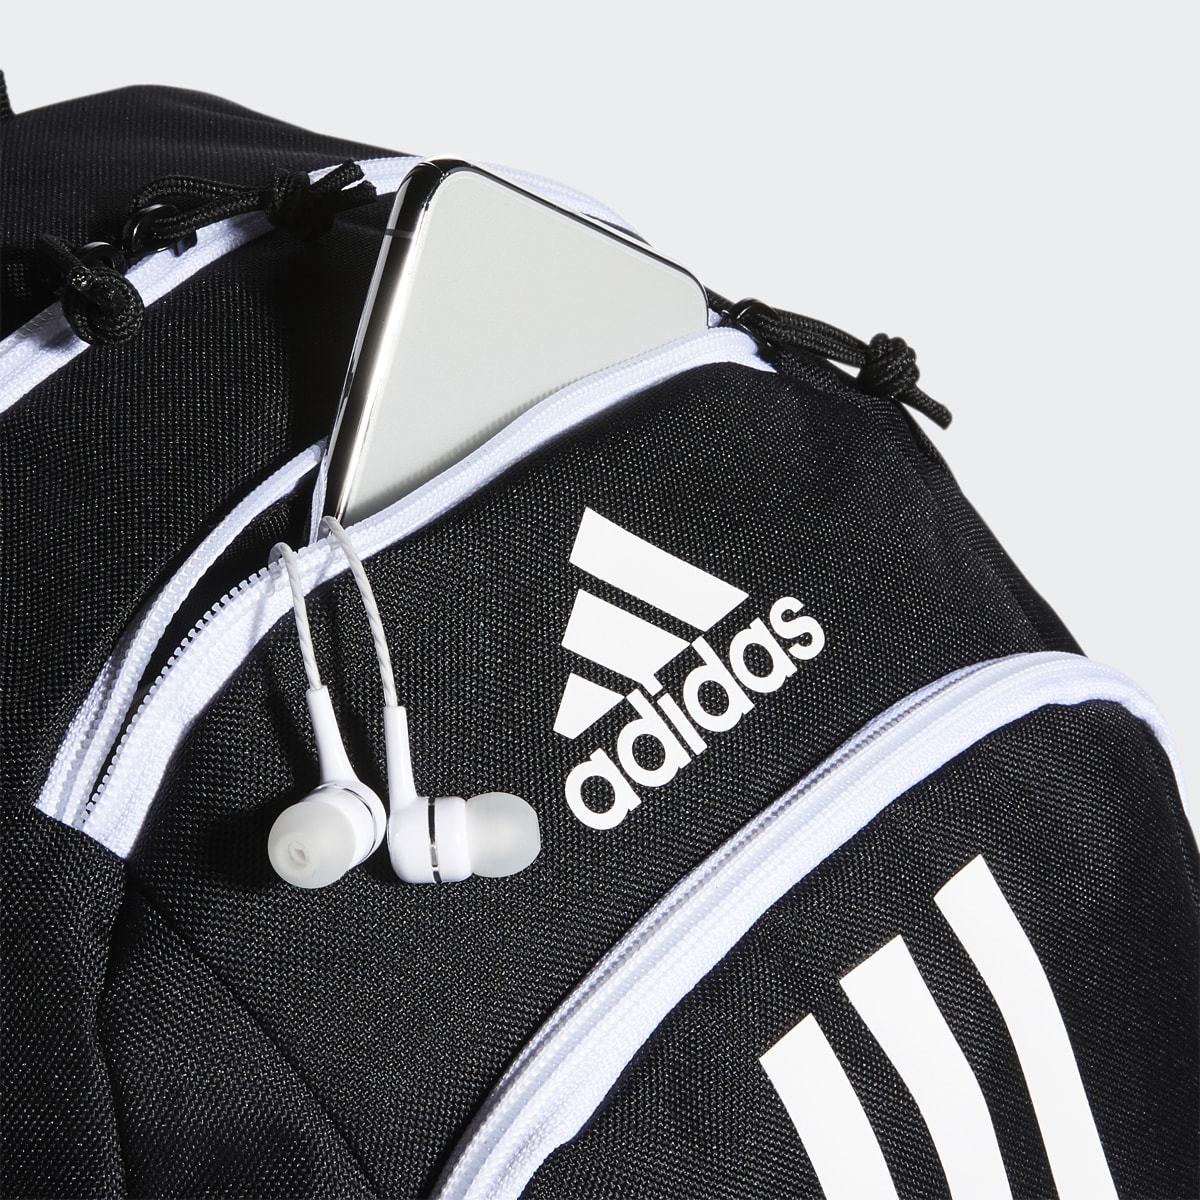 Adidas Creator Backpack. 7